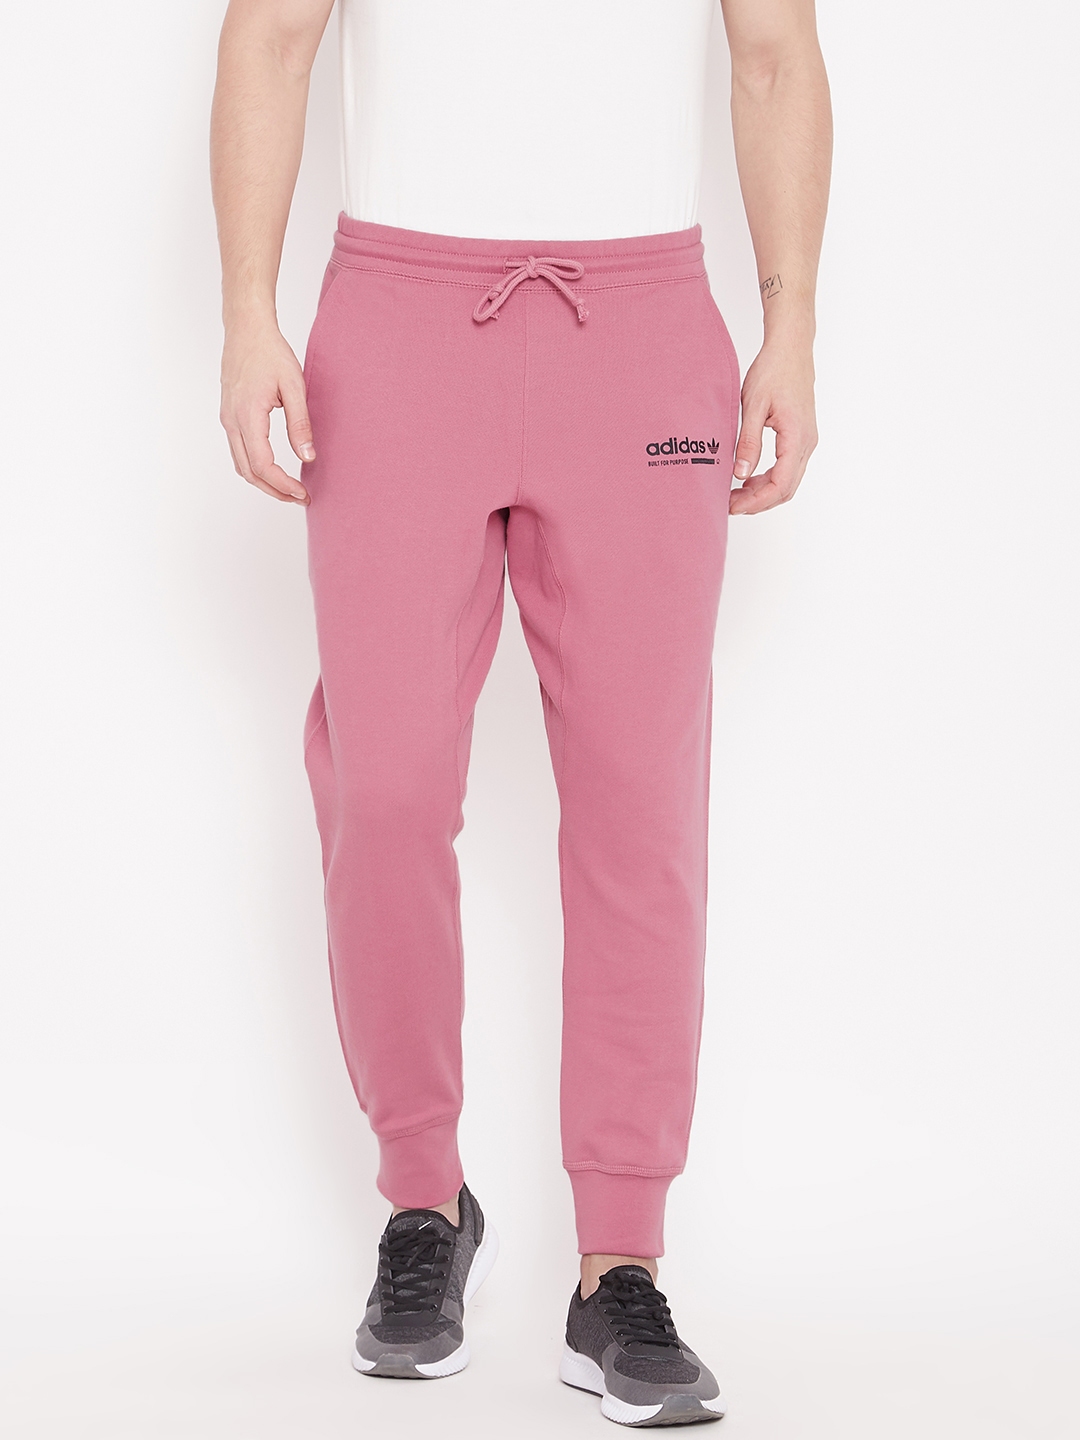 Aggregate 85+ adidas pink pants mens best - in.eteachers